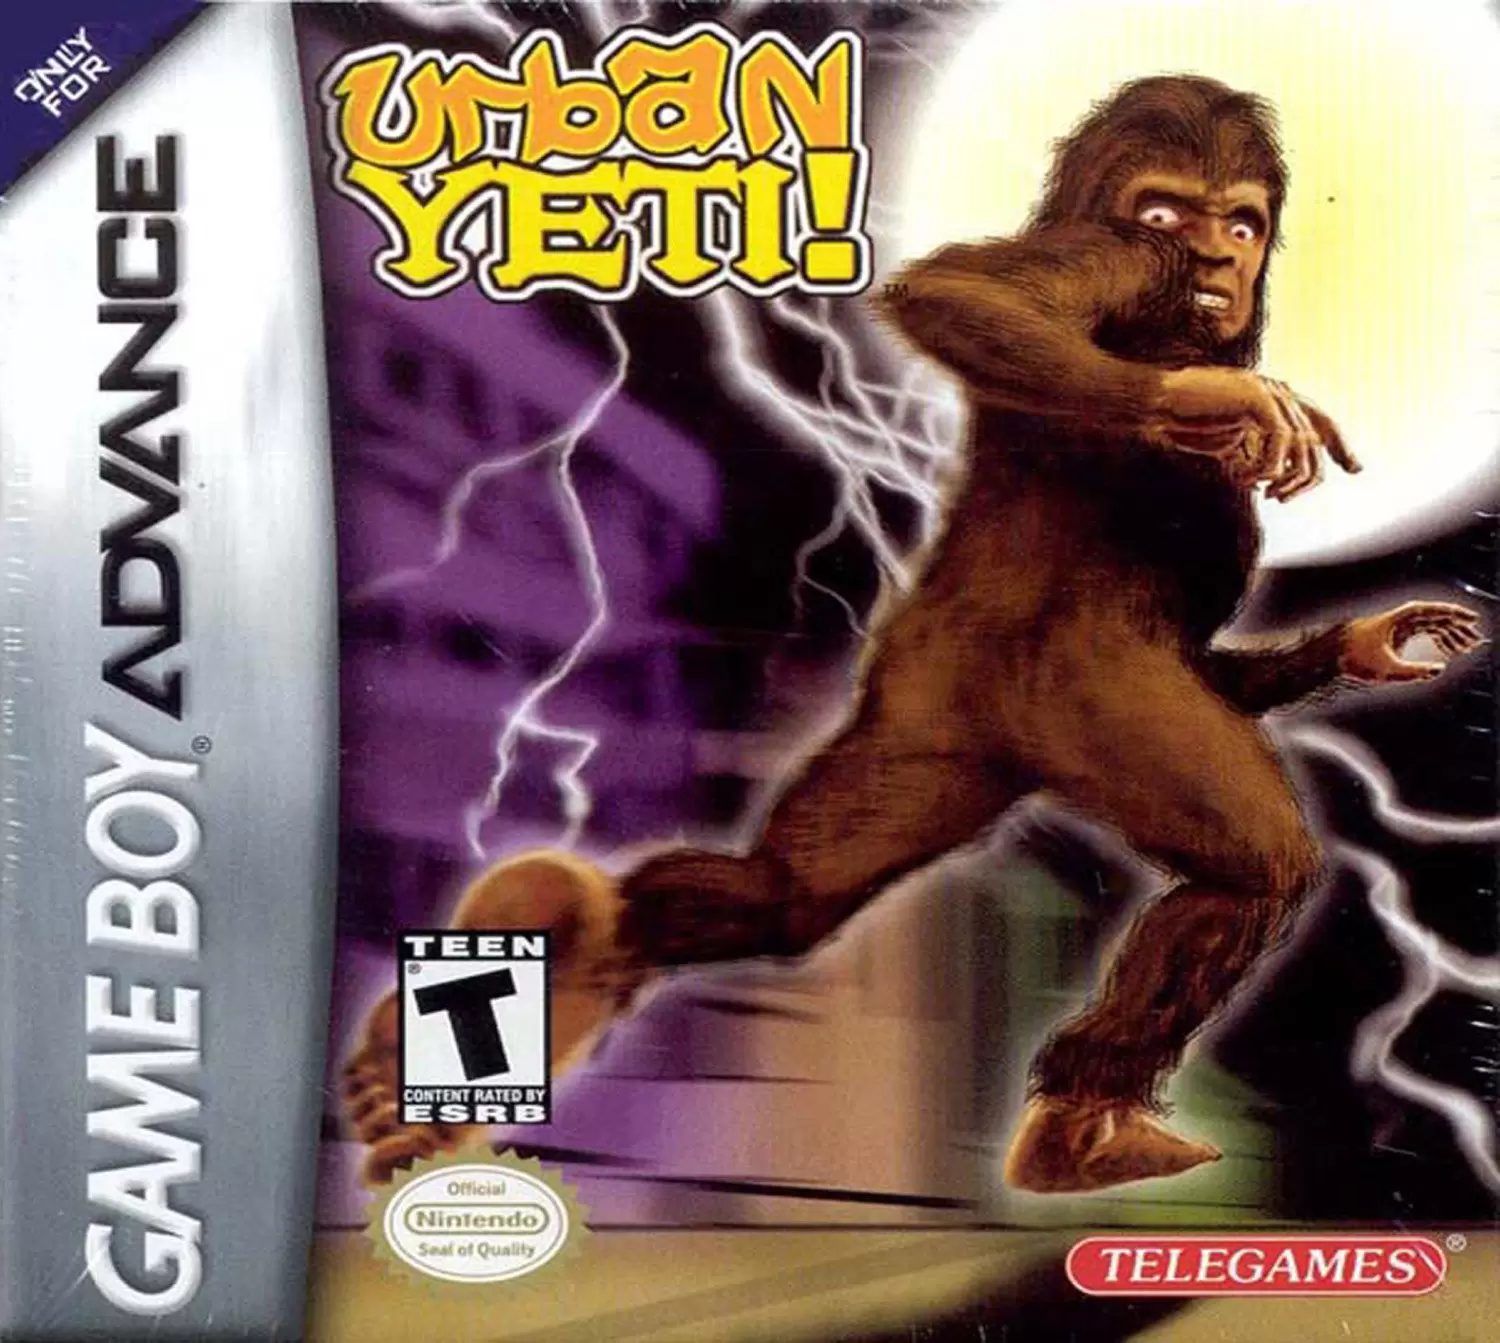 Game Boy Advance Games - Urban Yeti!